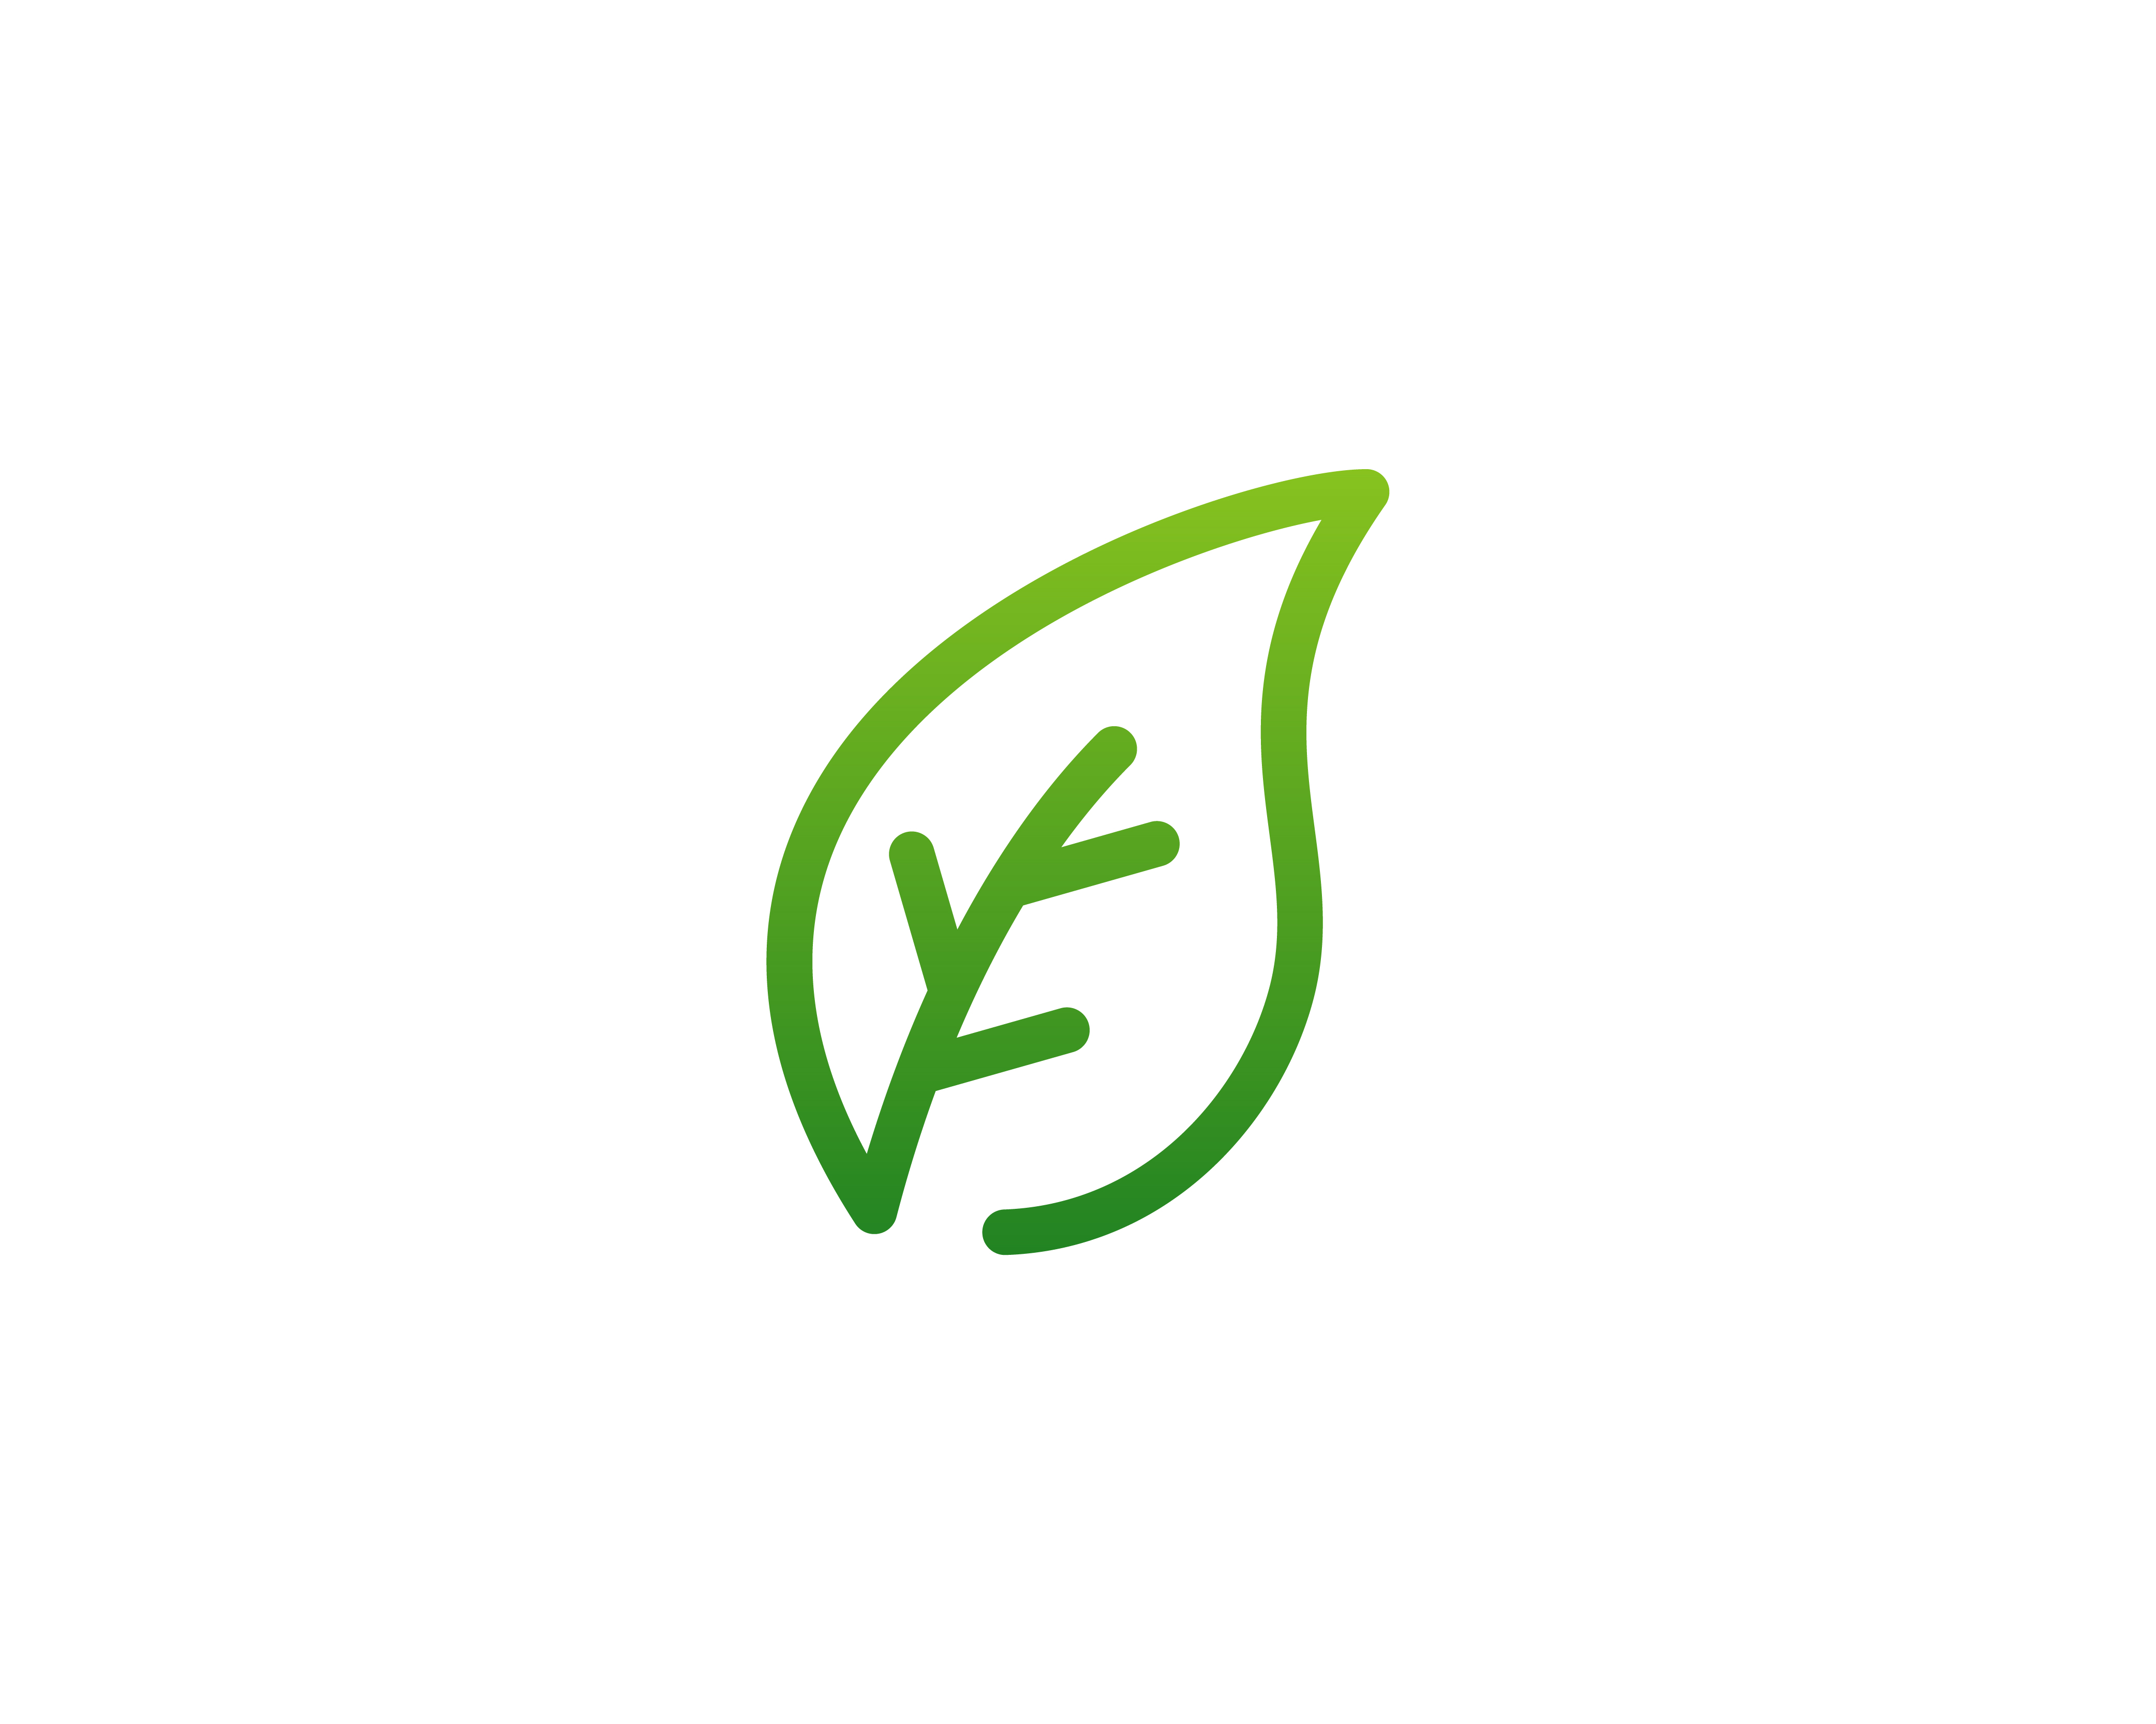 Natural Leaf Logo Icon Vector 547192 Vector Art At Vecteezy